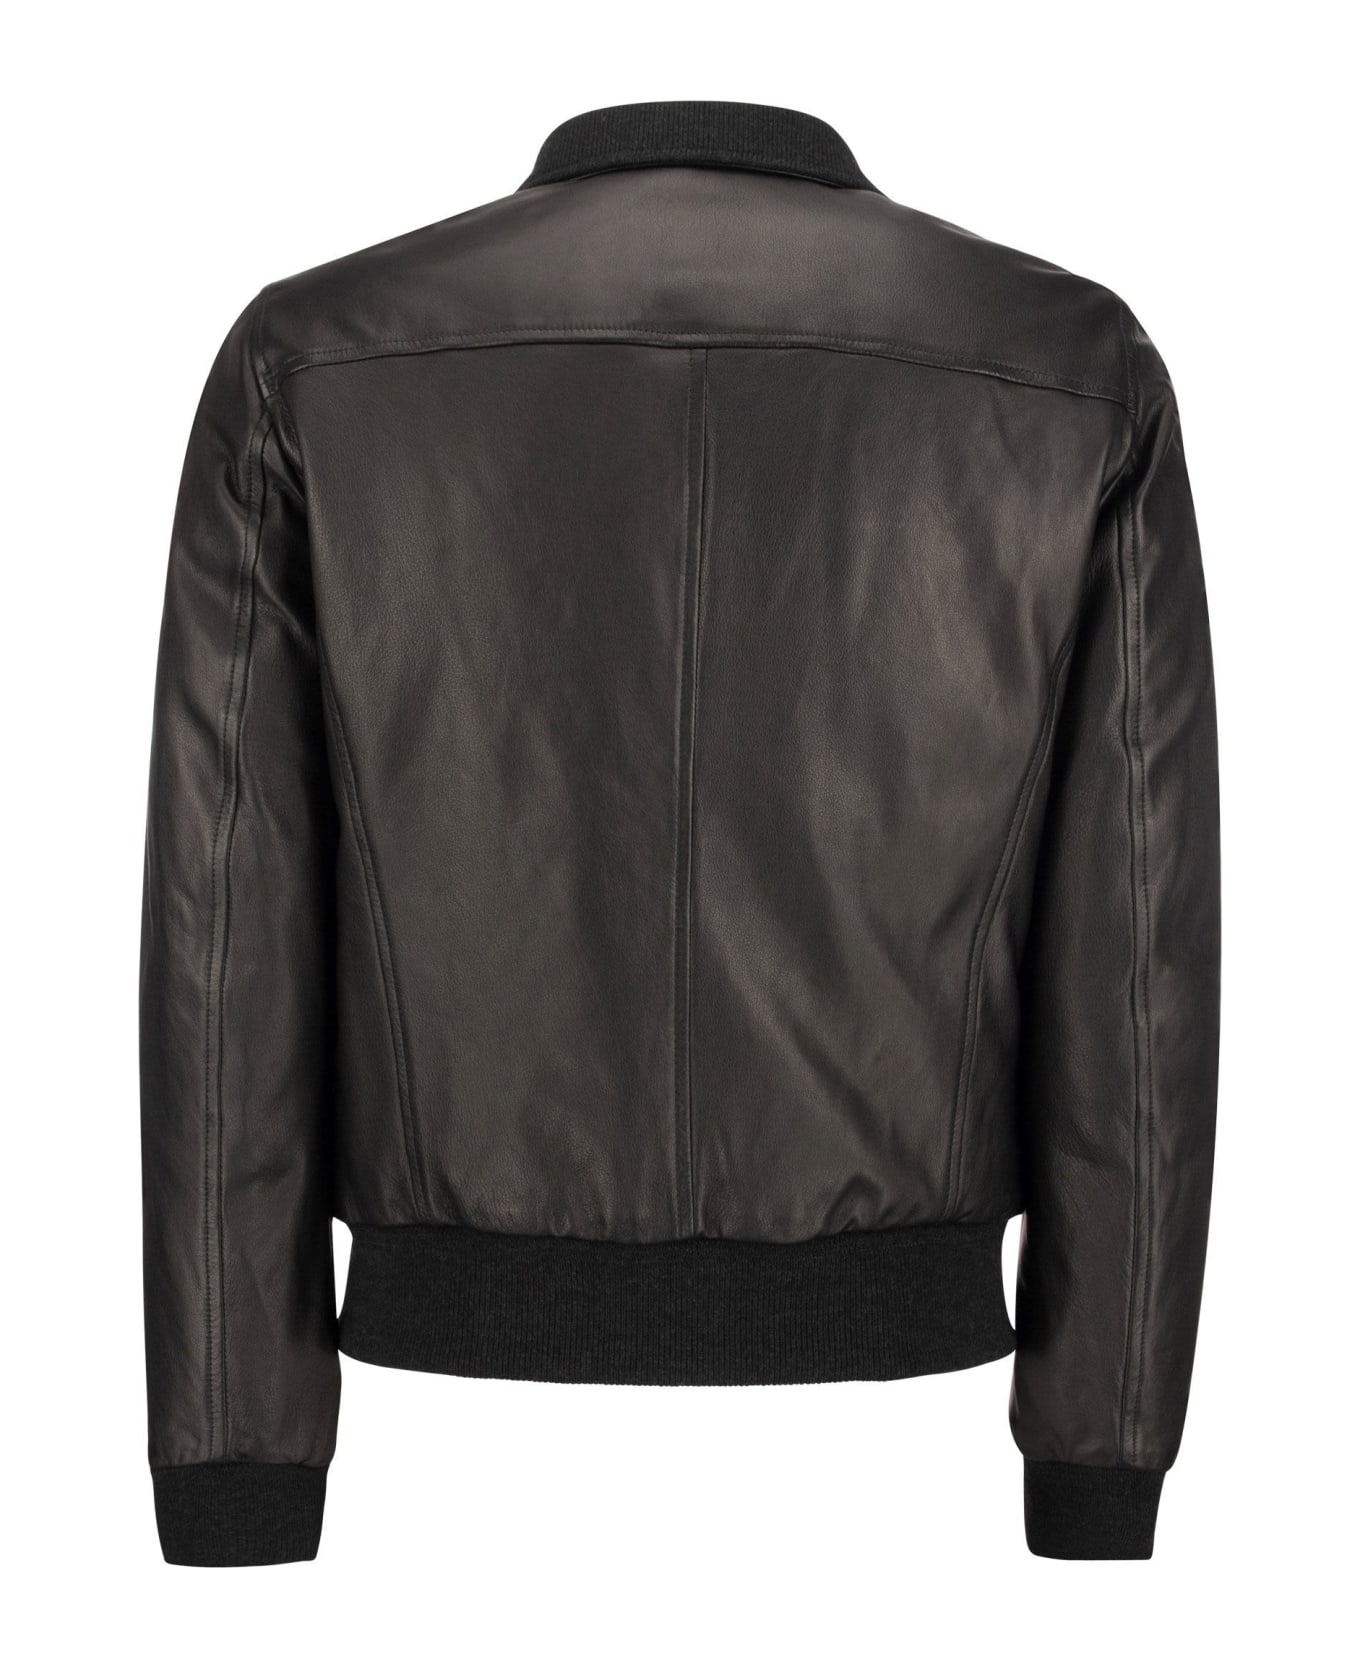 Stewart Colorado - Padded Leather Jacket - Black